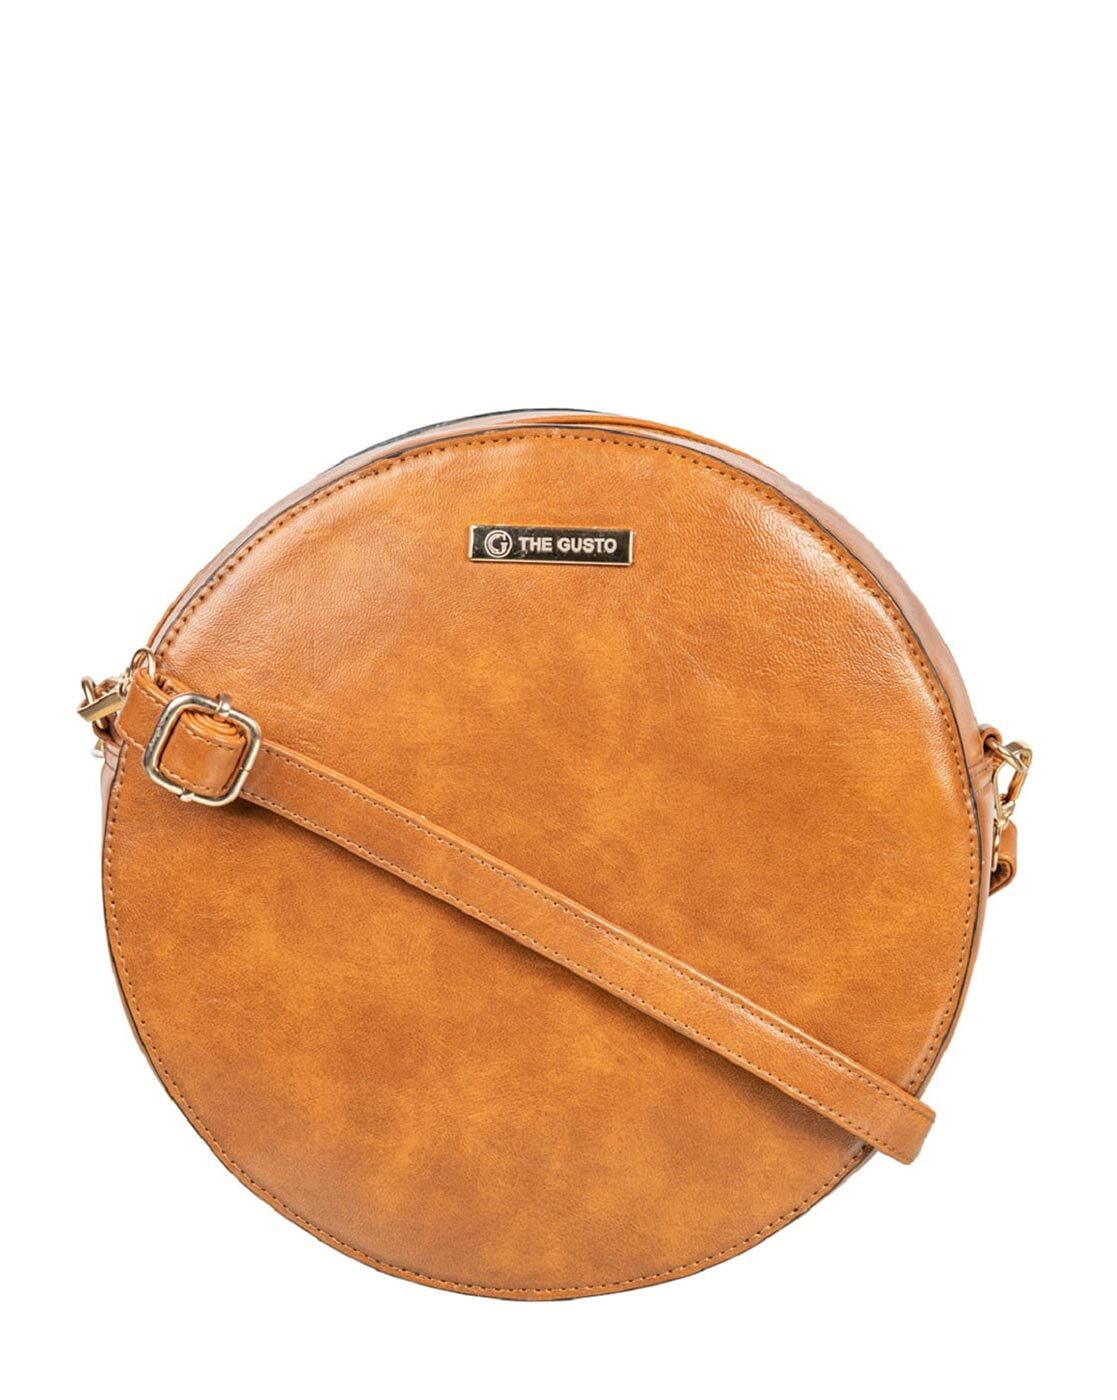 Cordera Leather Purse Bag, Camel | Glasswing